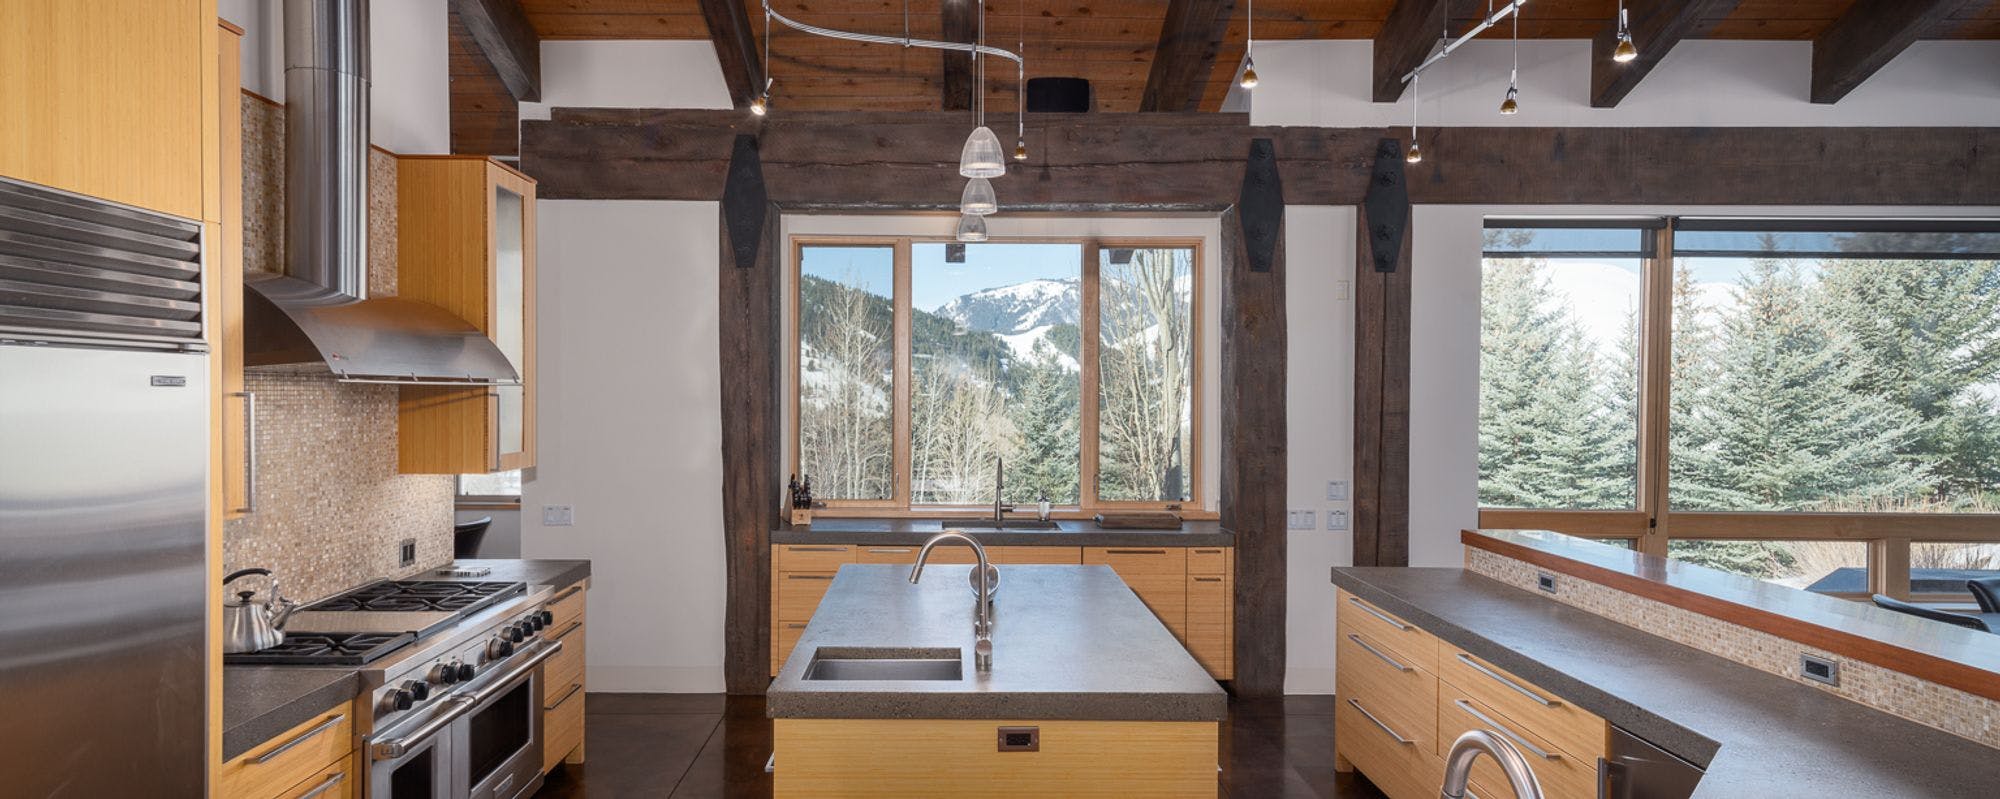 Vacation rental estate in Sun Valley with modern kitchen